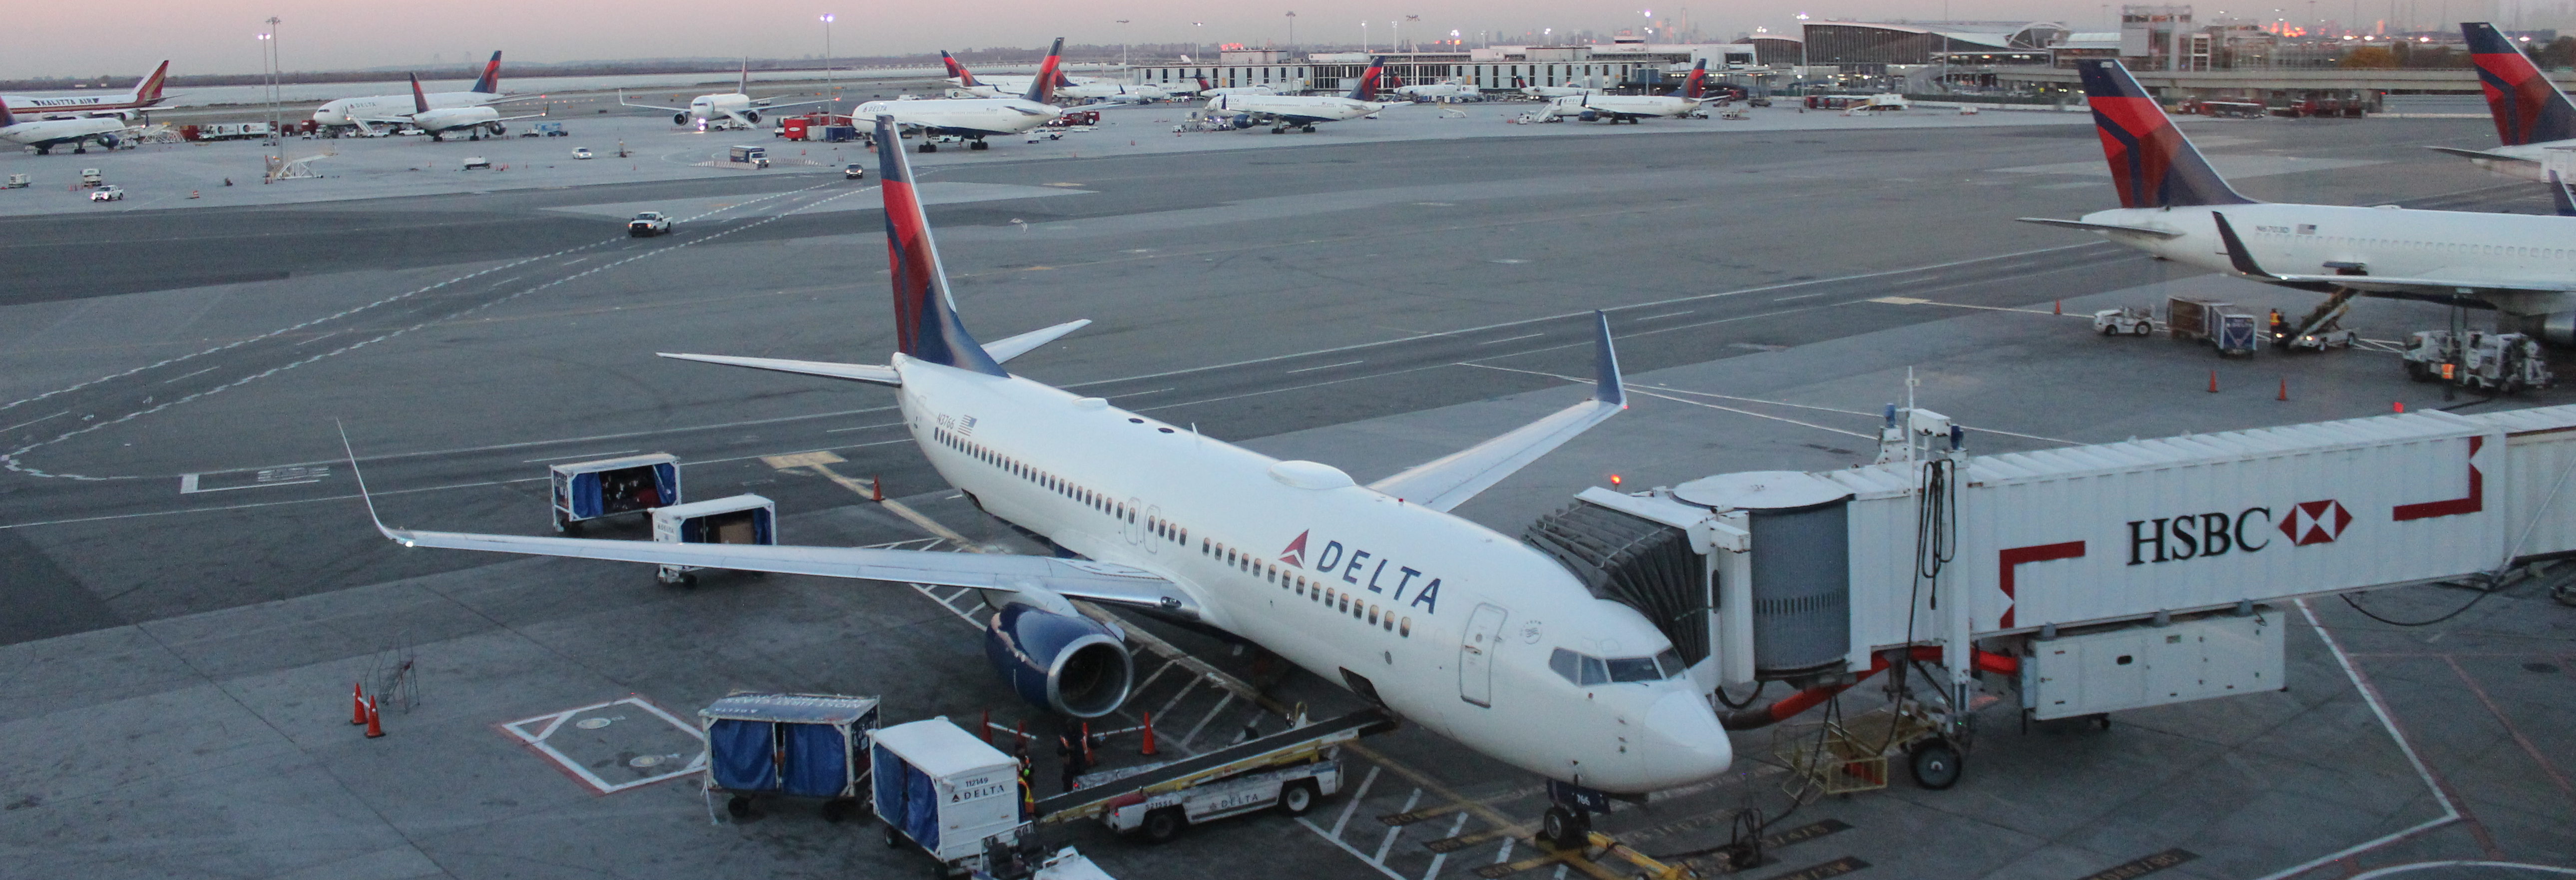 Delta 737 from JFK SkyClub